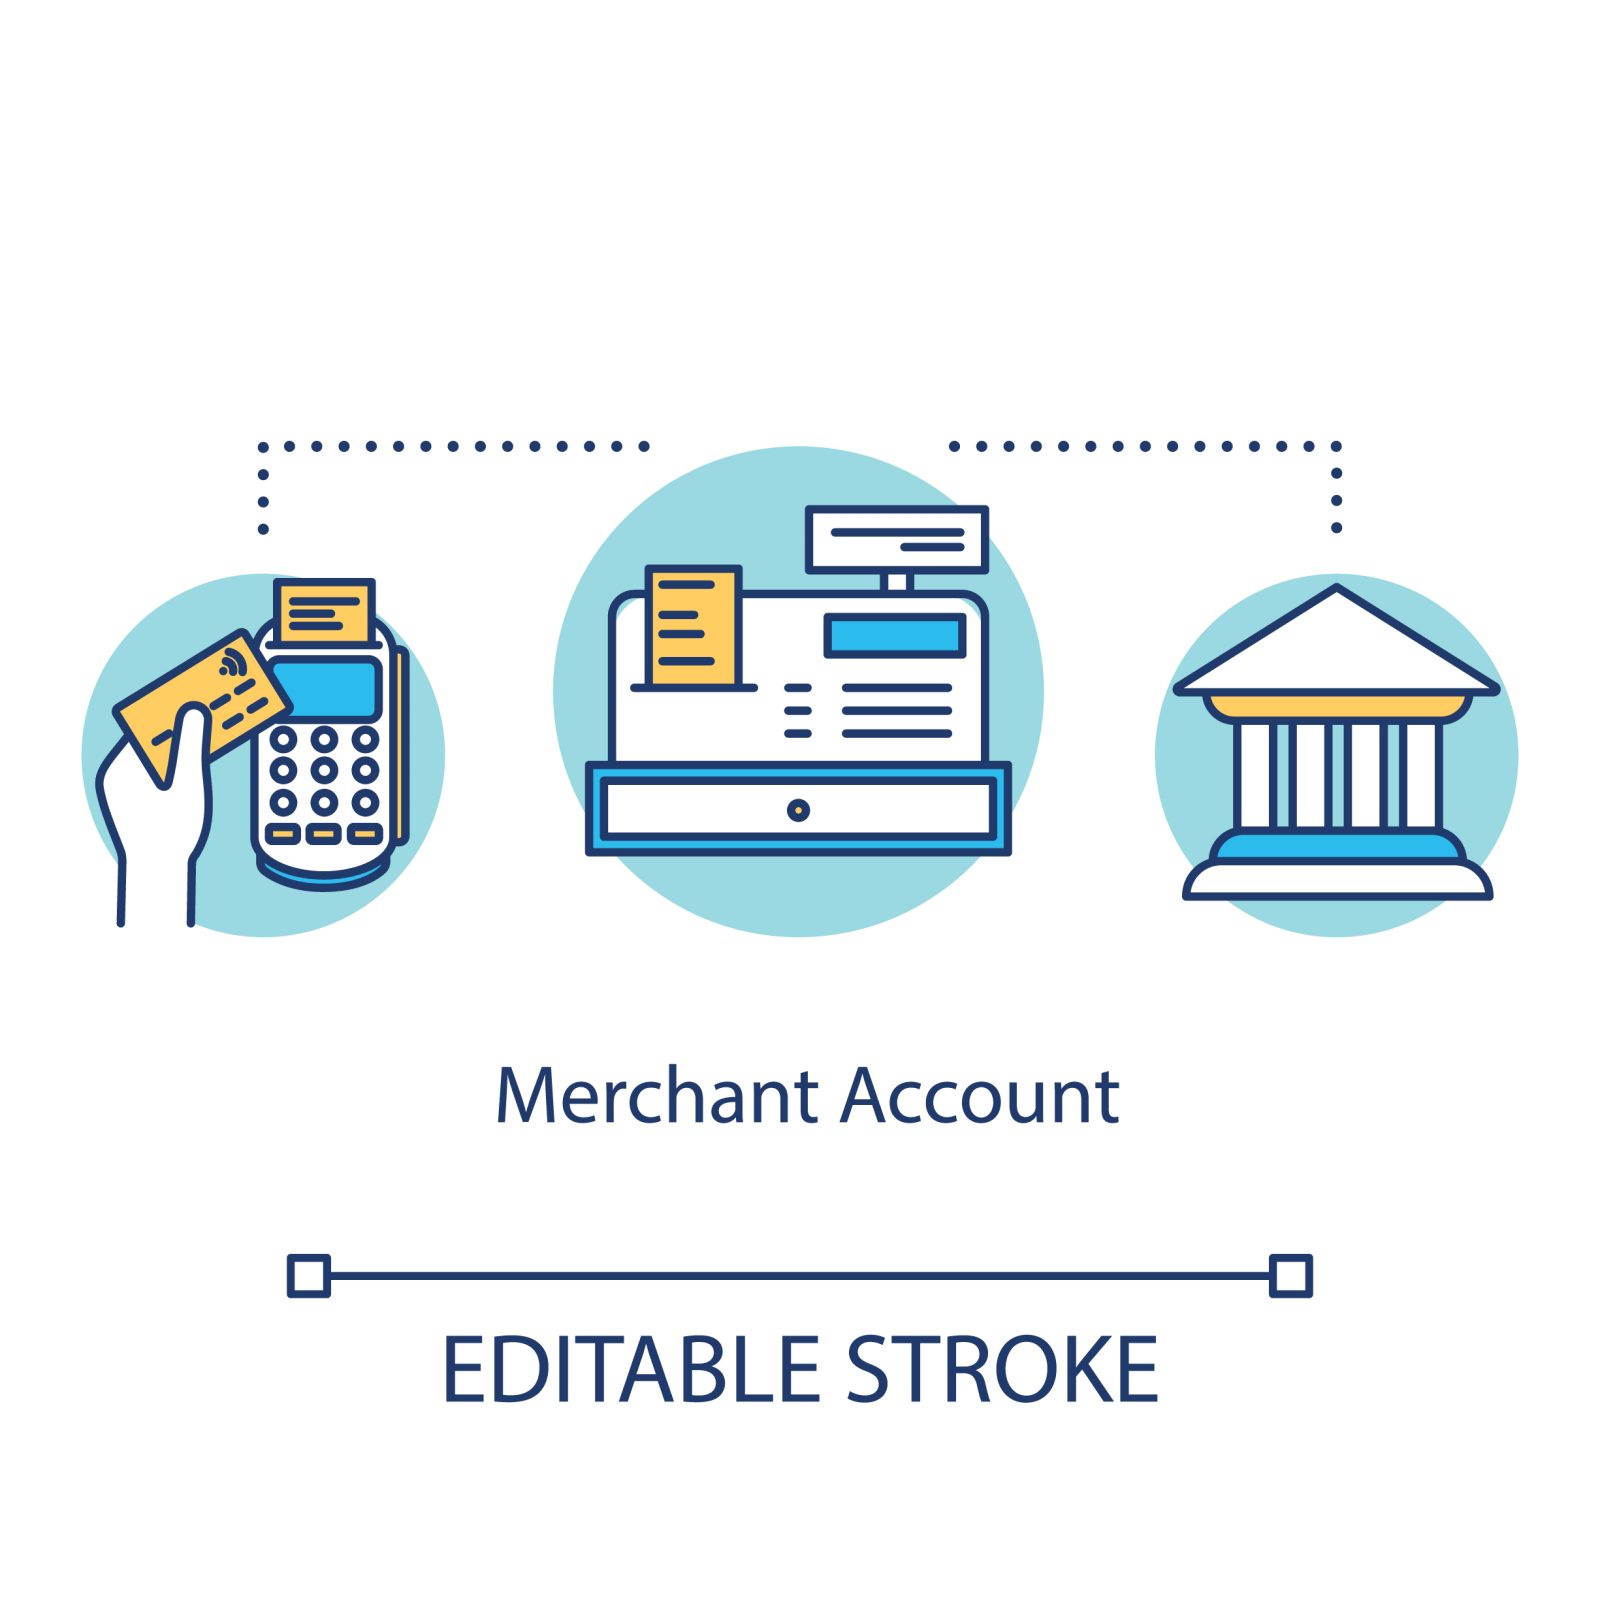 Merchant account concept icon. Payment transaction idea thin line illustration.